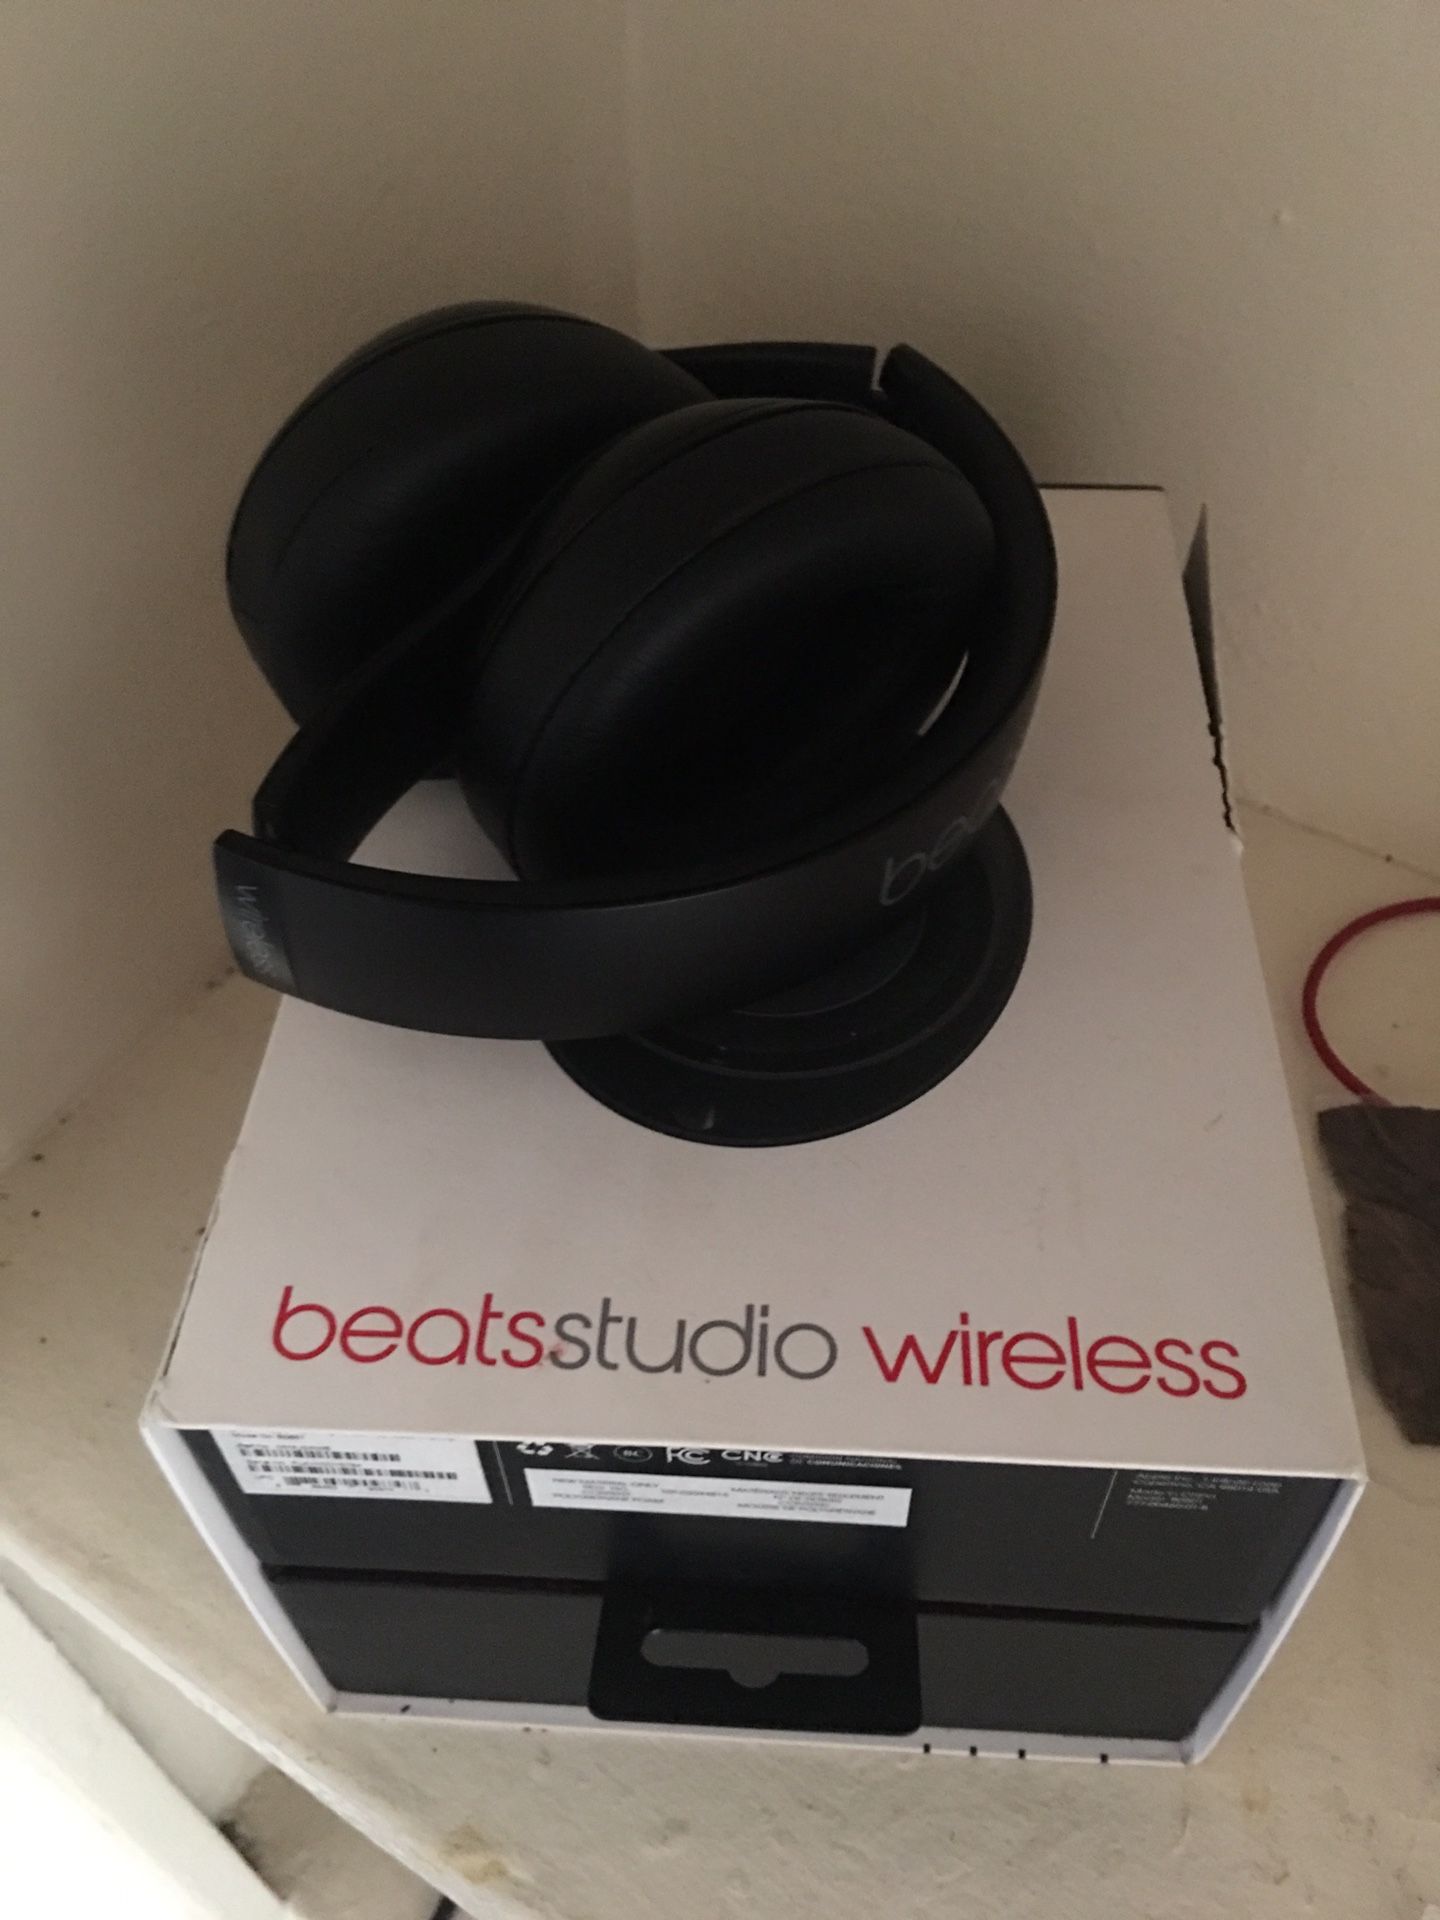 All black beats studio wireless...